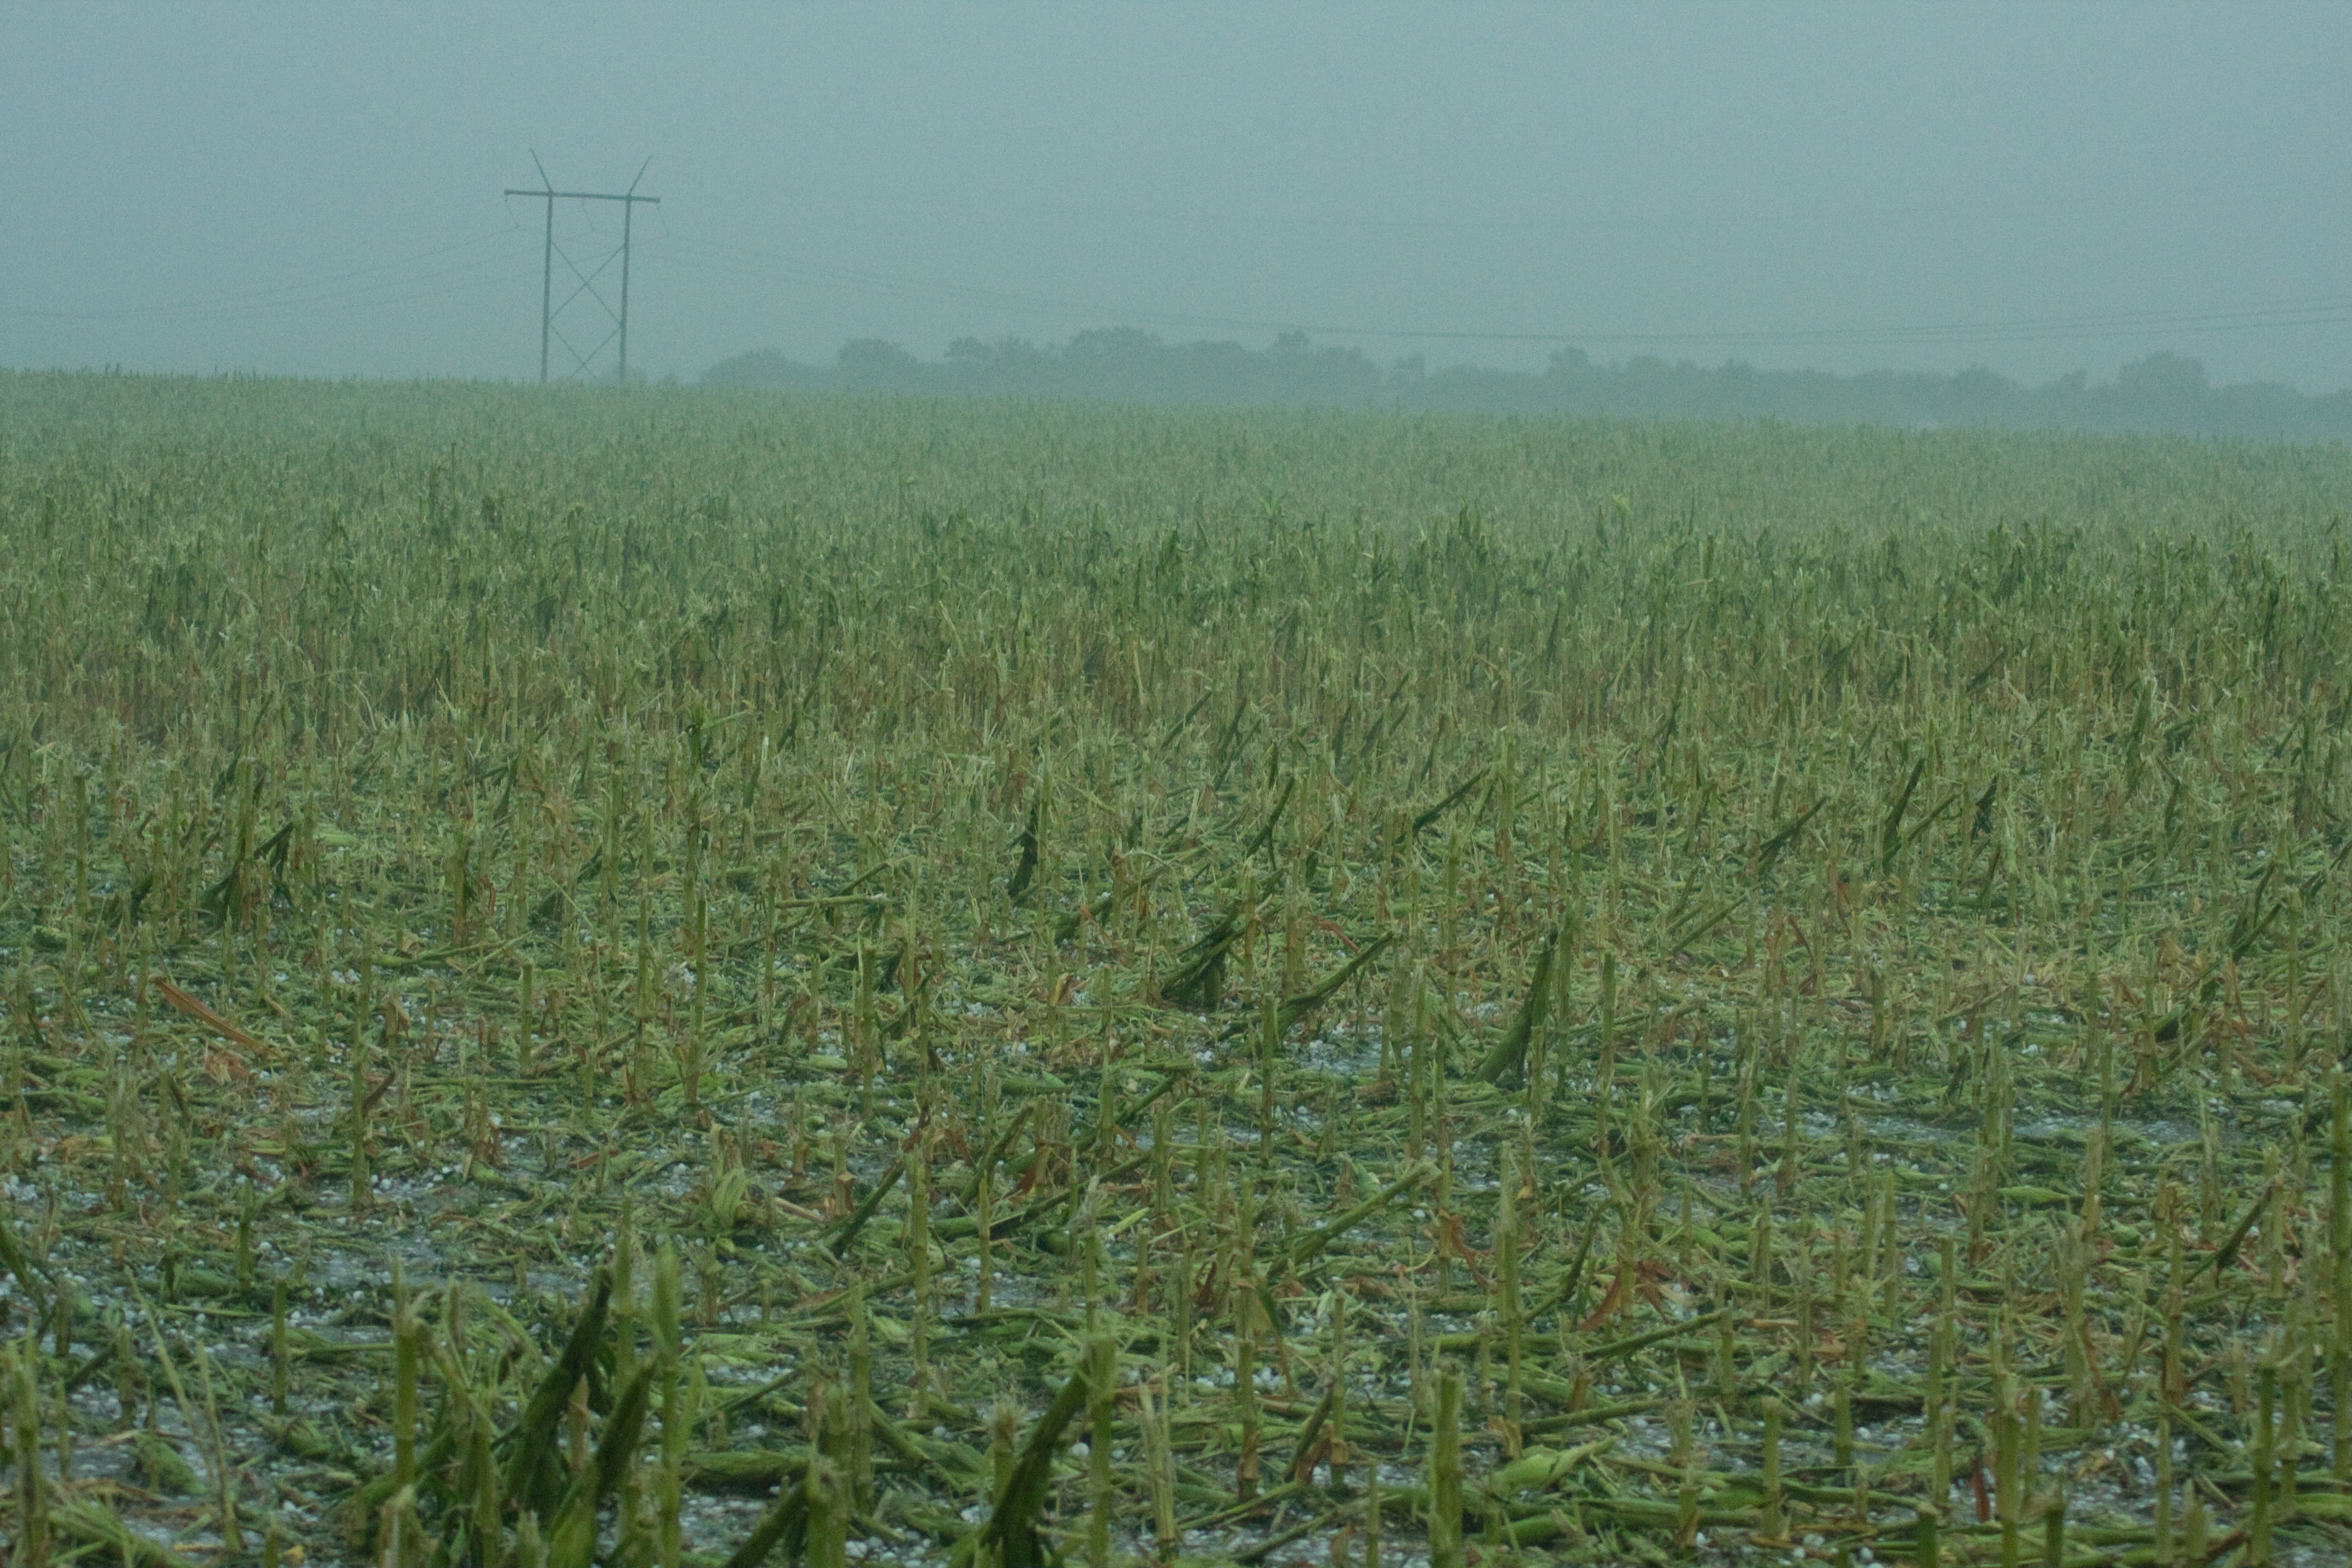 Completely demolished corn field near Callendar, Iowa. The 